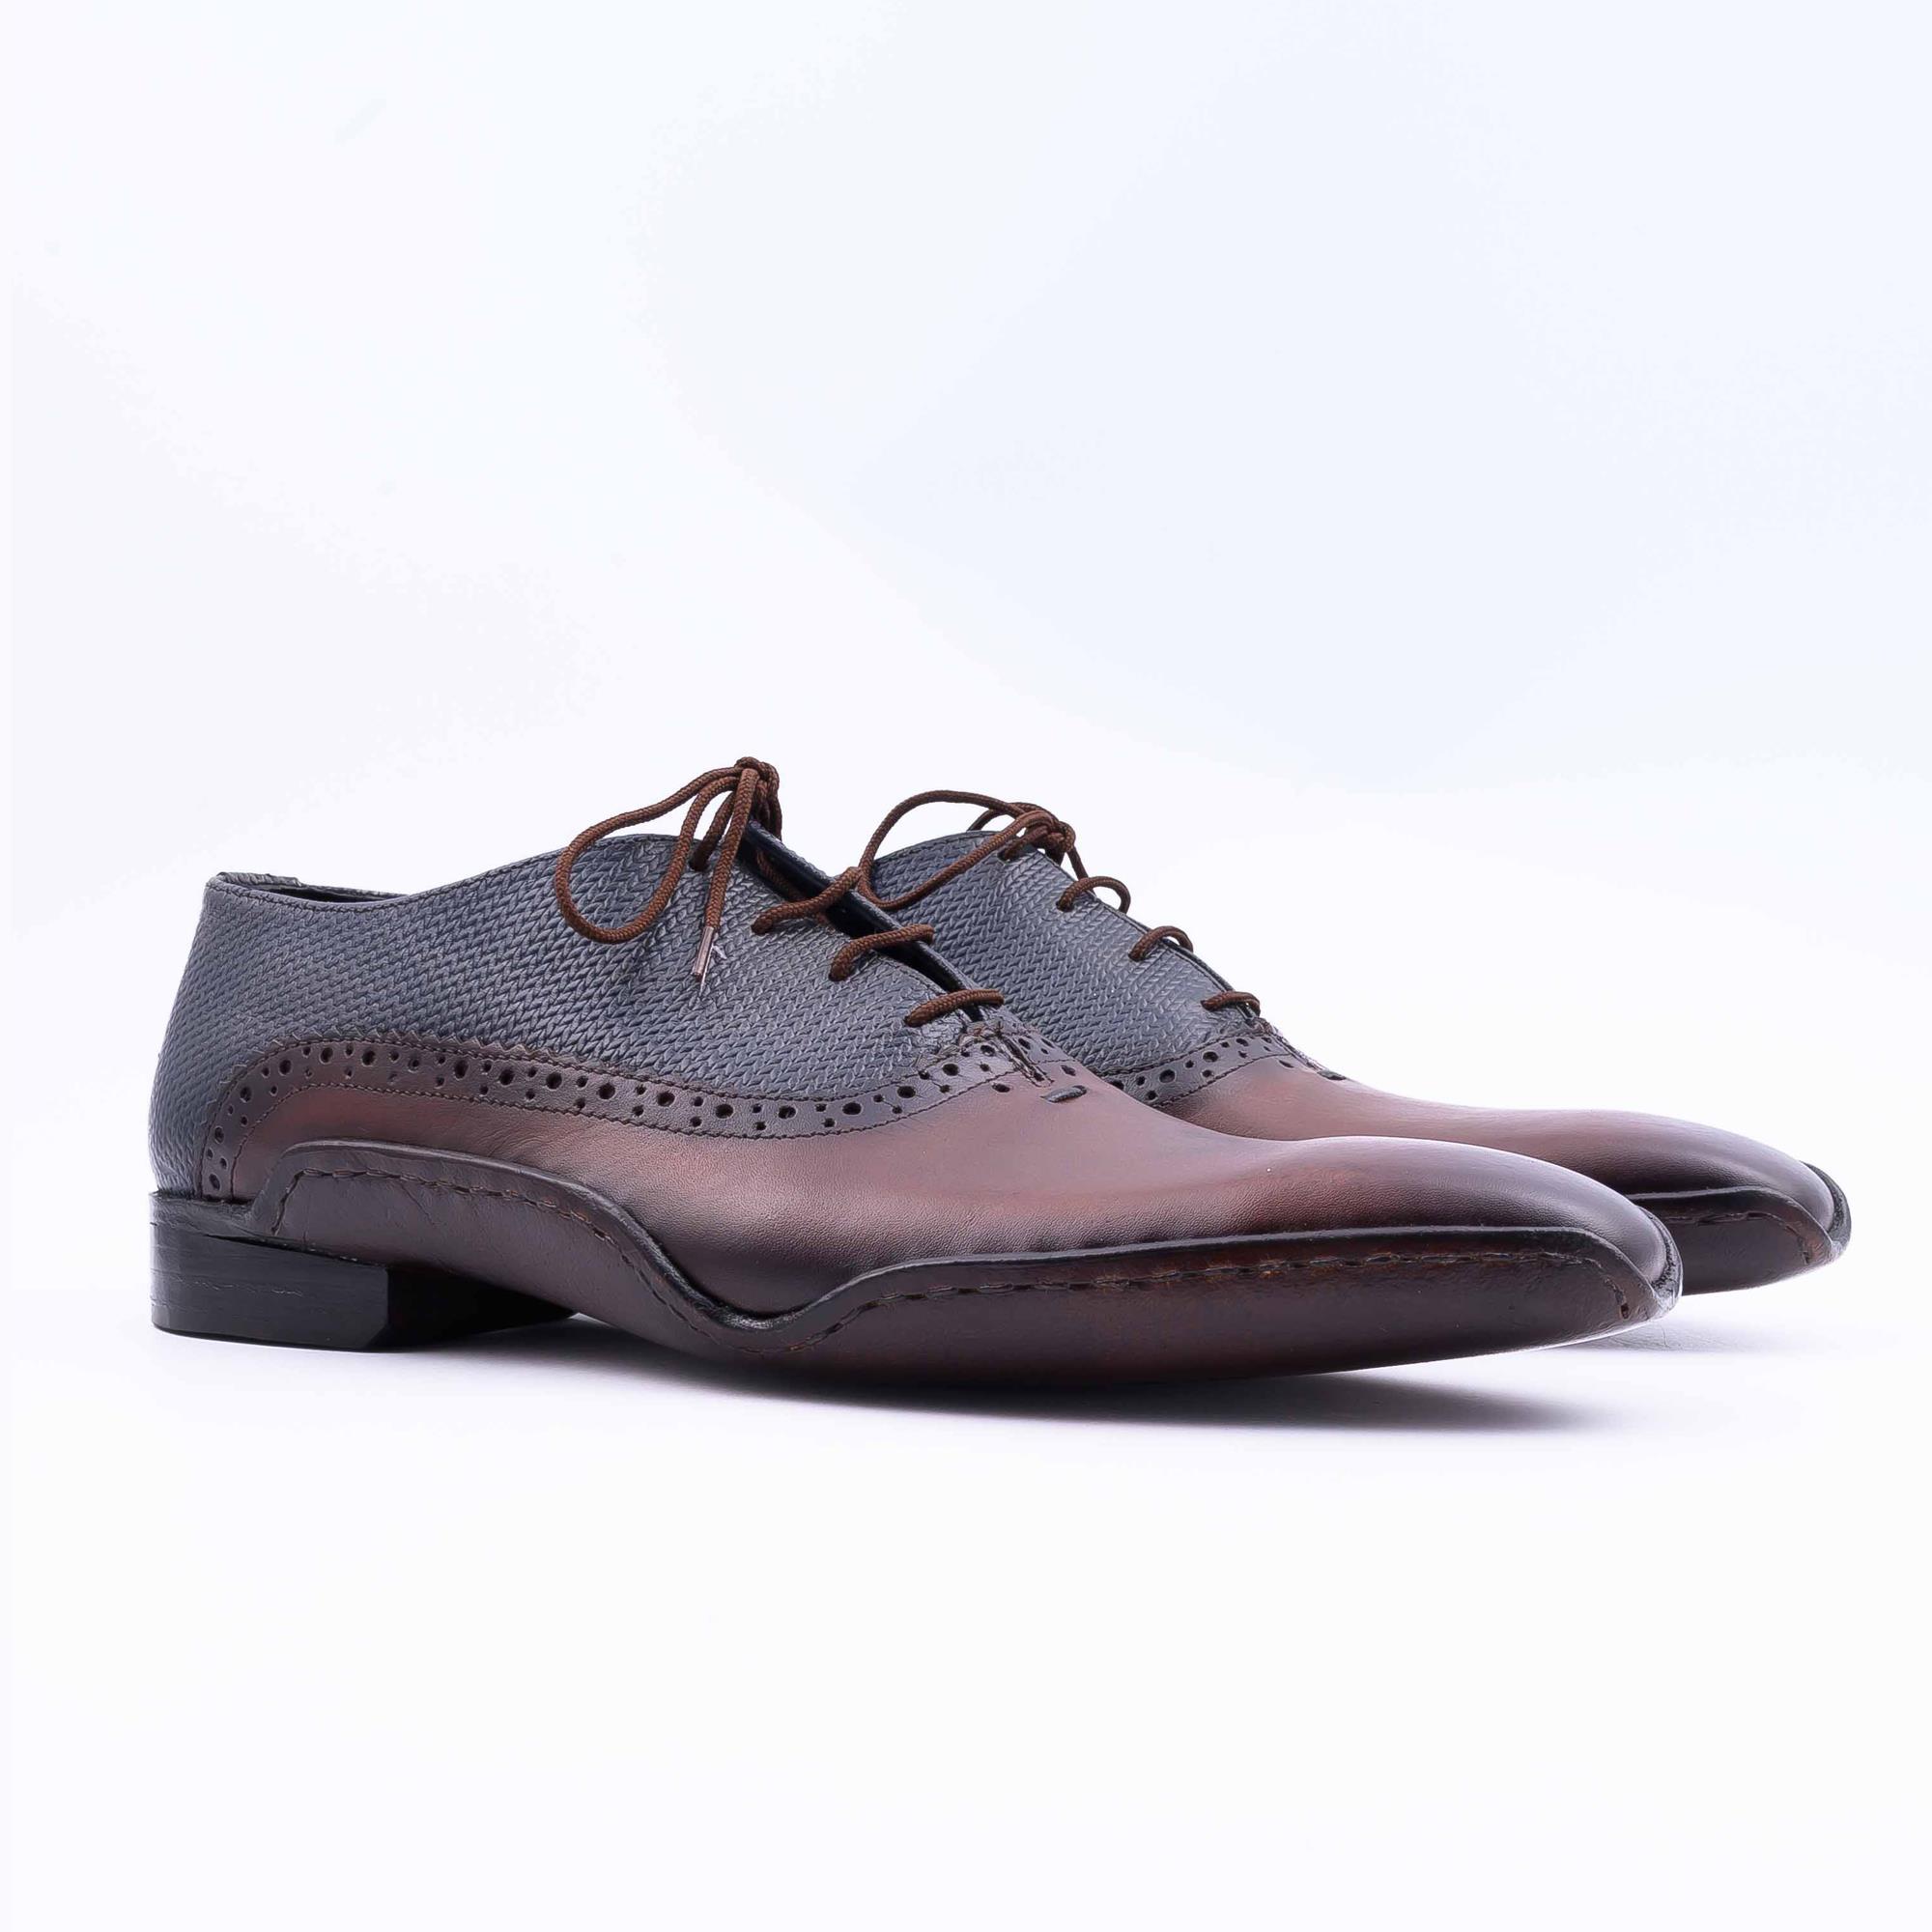 Borjan Shoes For Men - Shoes Brands in Pakistan  Leather shoes brand, Top  10 shoes, Shoe brands